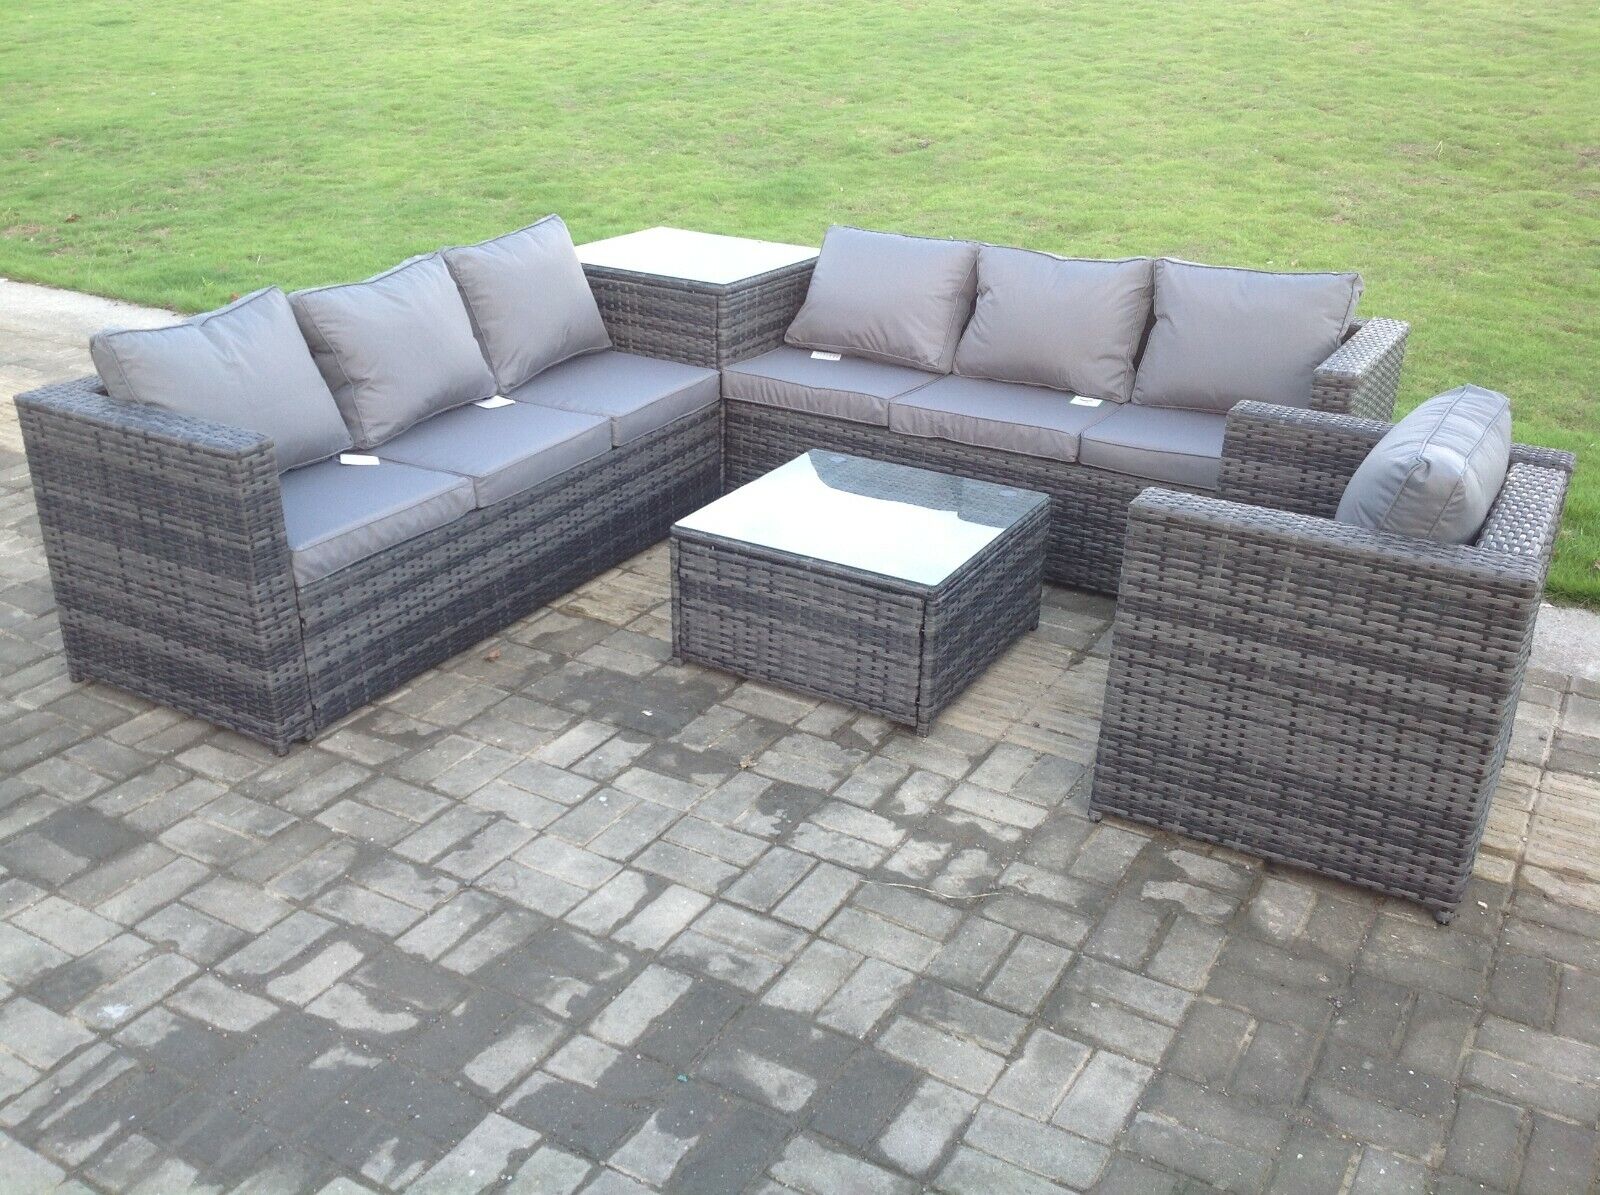 Aberdeen Grey Outdoor Rattan Garden Furniture Set